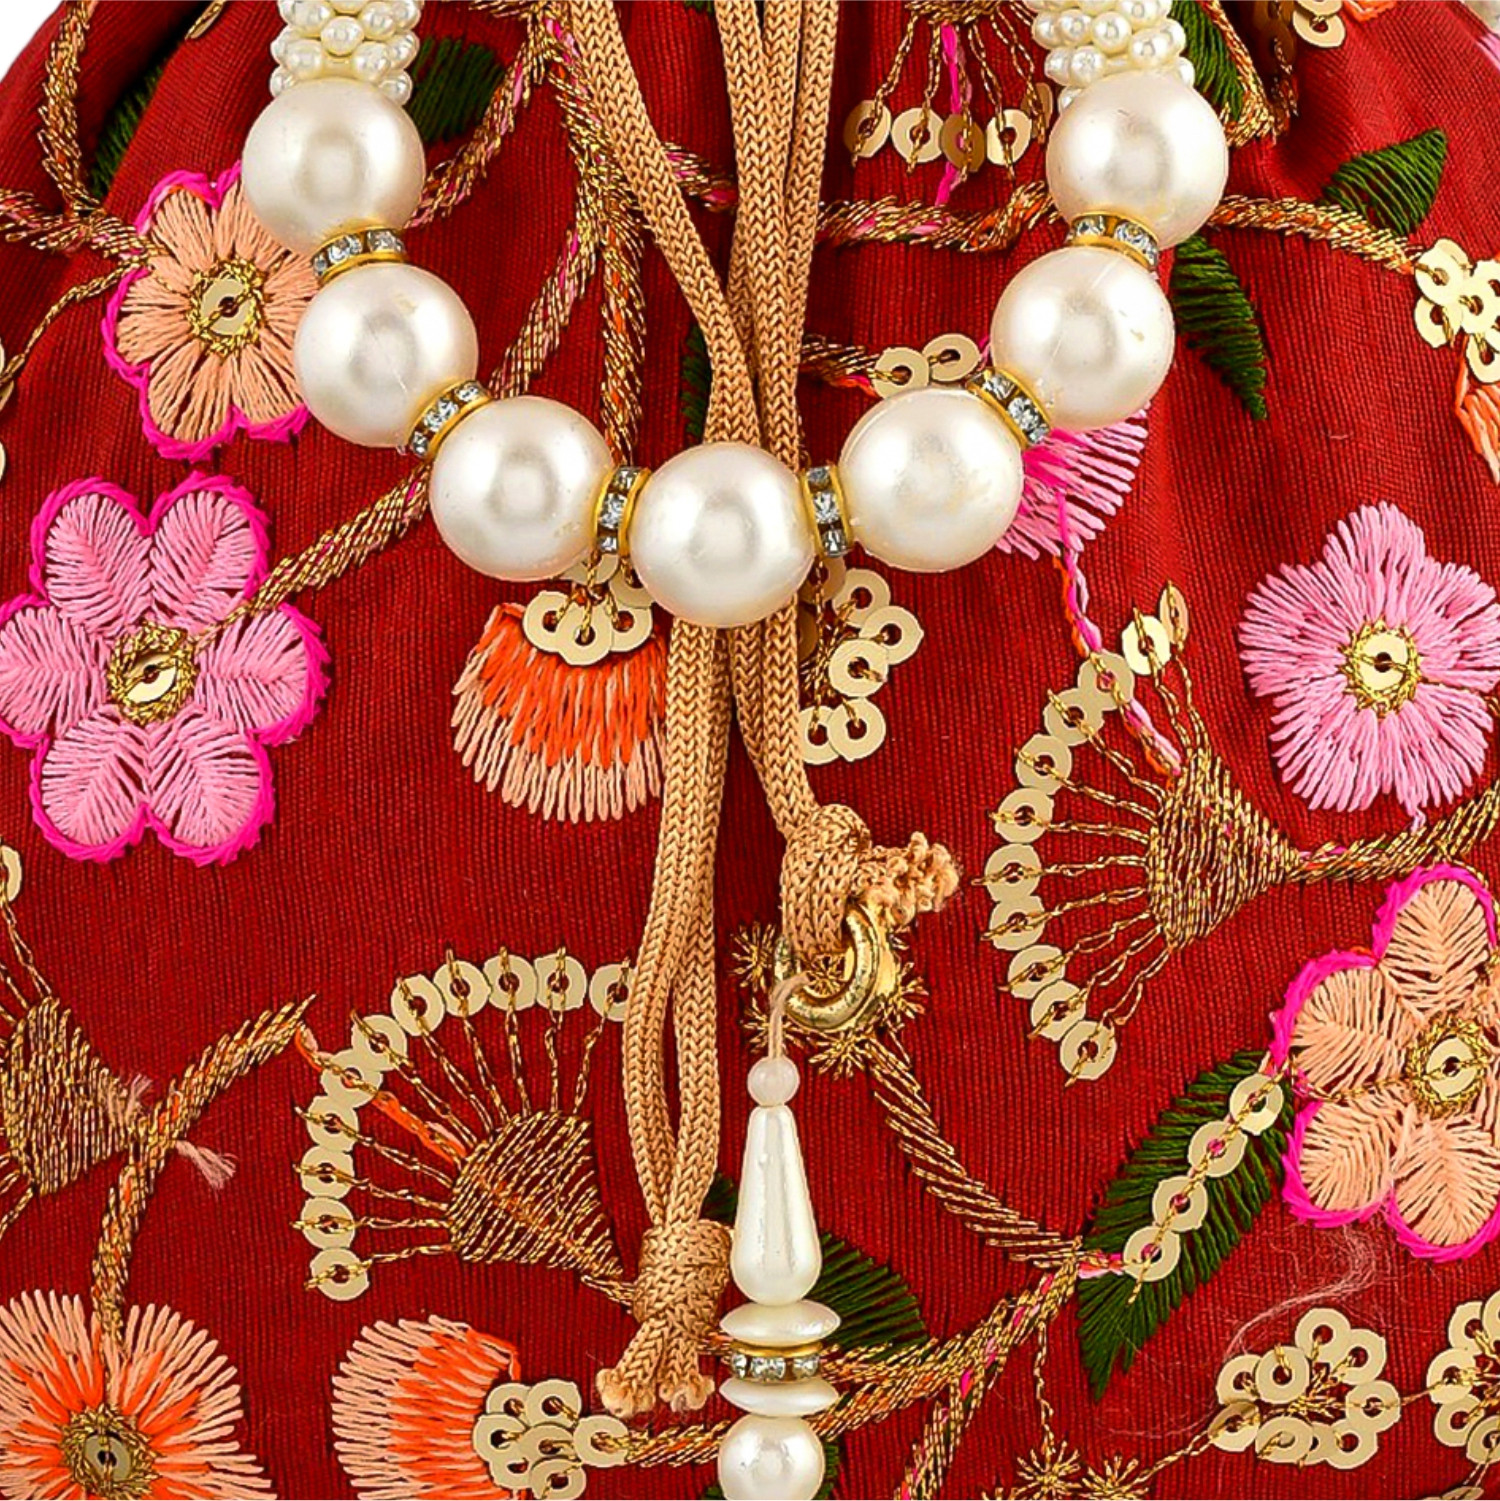 Kuber Industries Potli | Silk Wedding Potli | Christmas Gift Potli | Baby Shower Potli | Traditional Shagun Potli | Drawstring with Beads Handle Potli | New Flower Embroidery Potli | Maroon